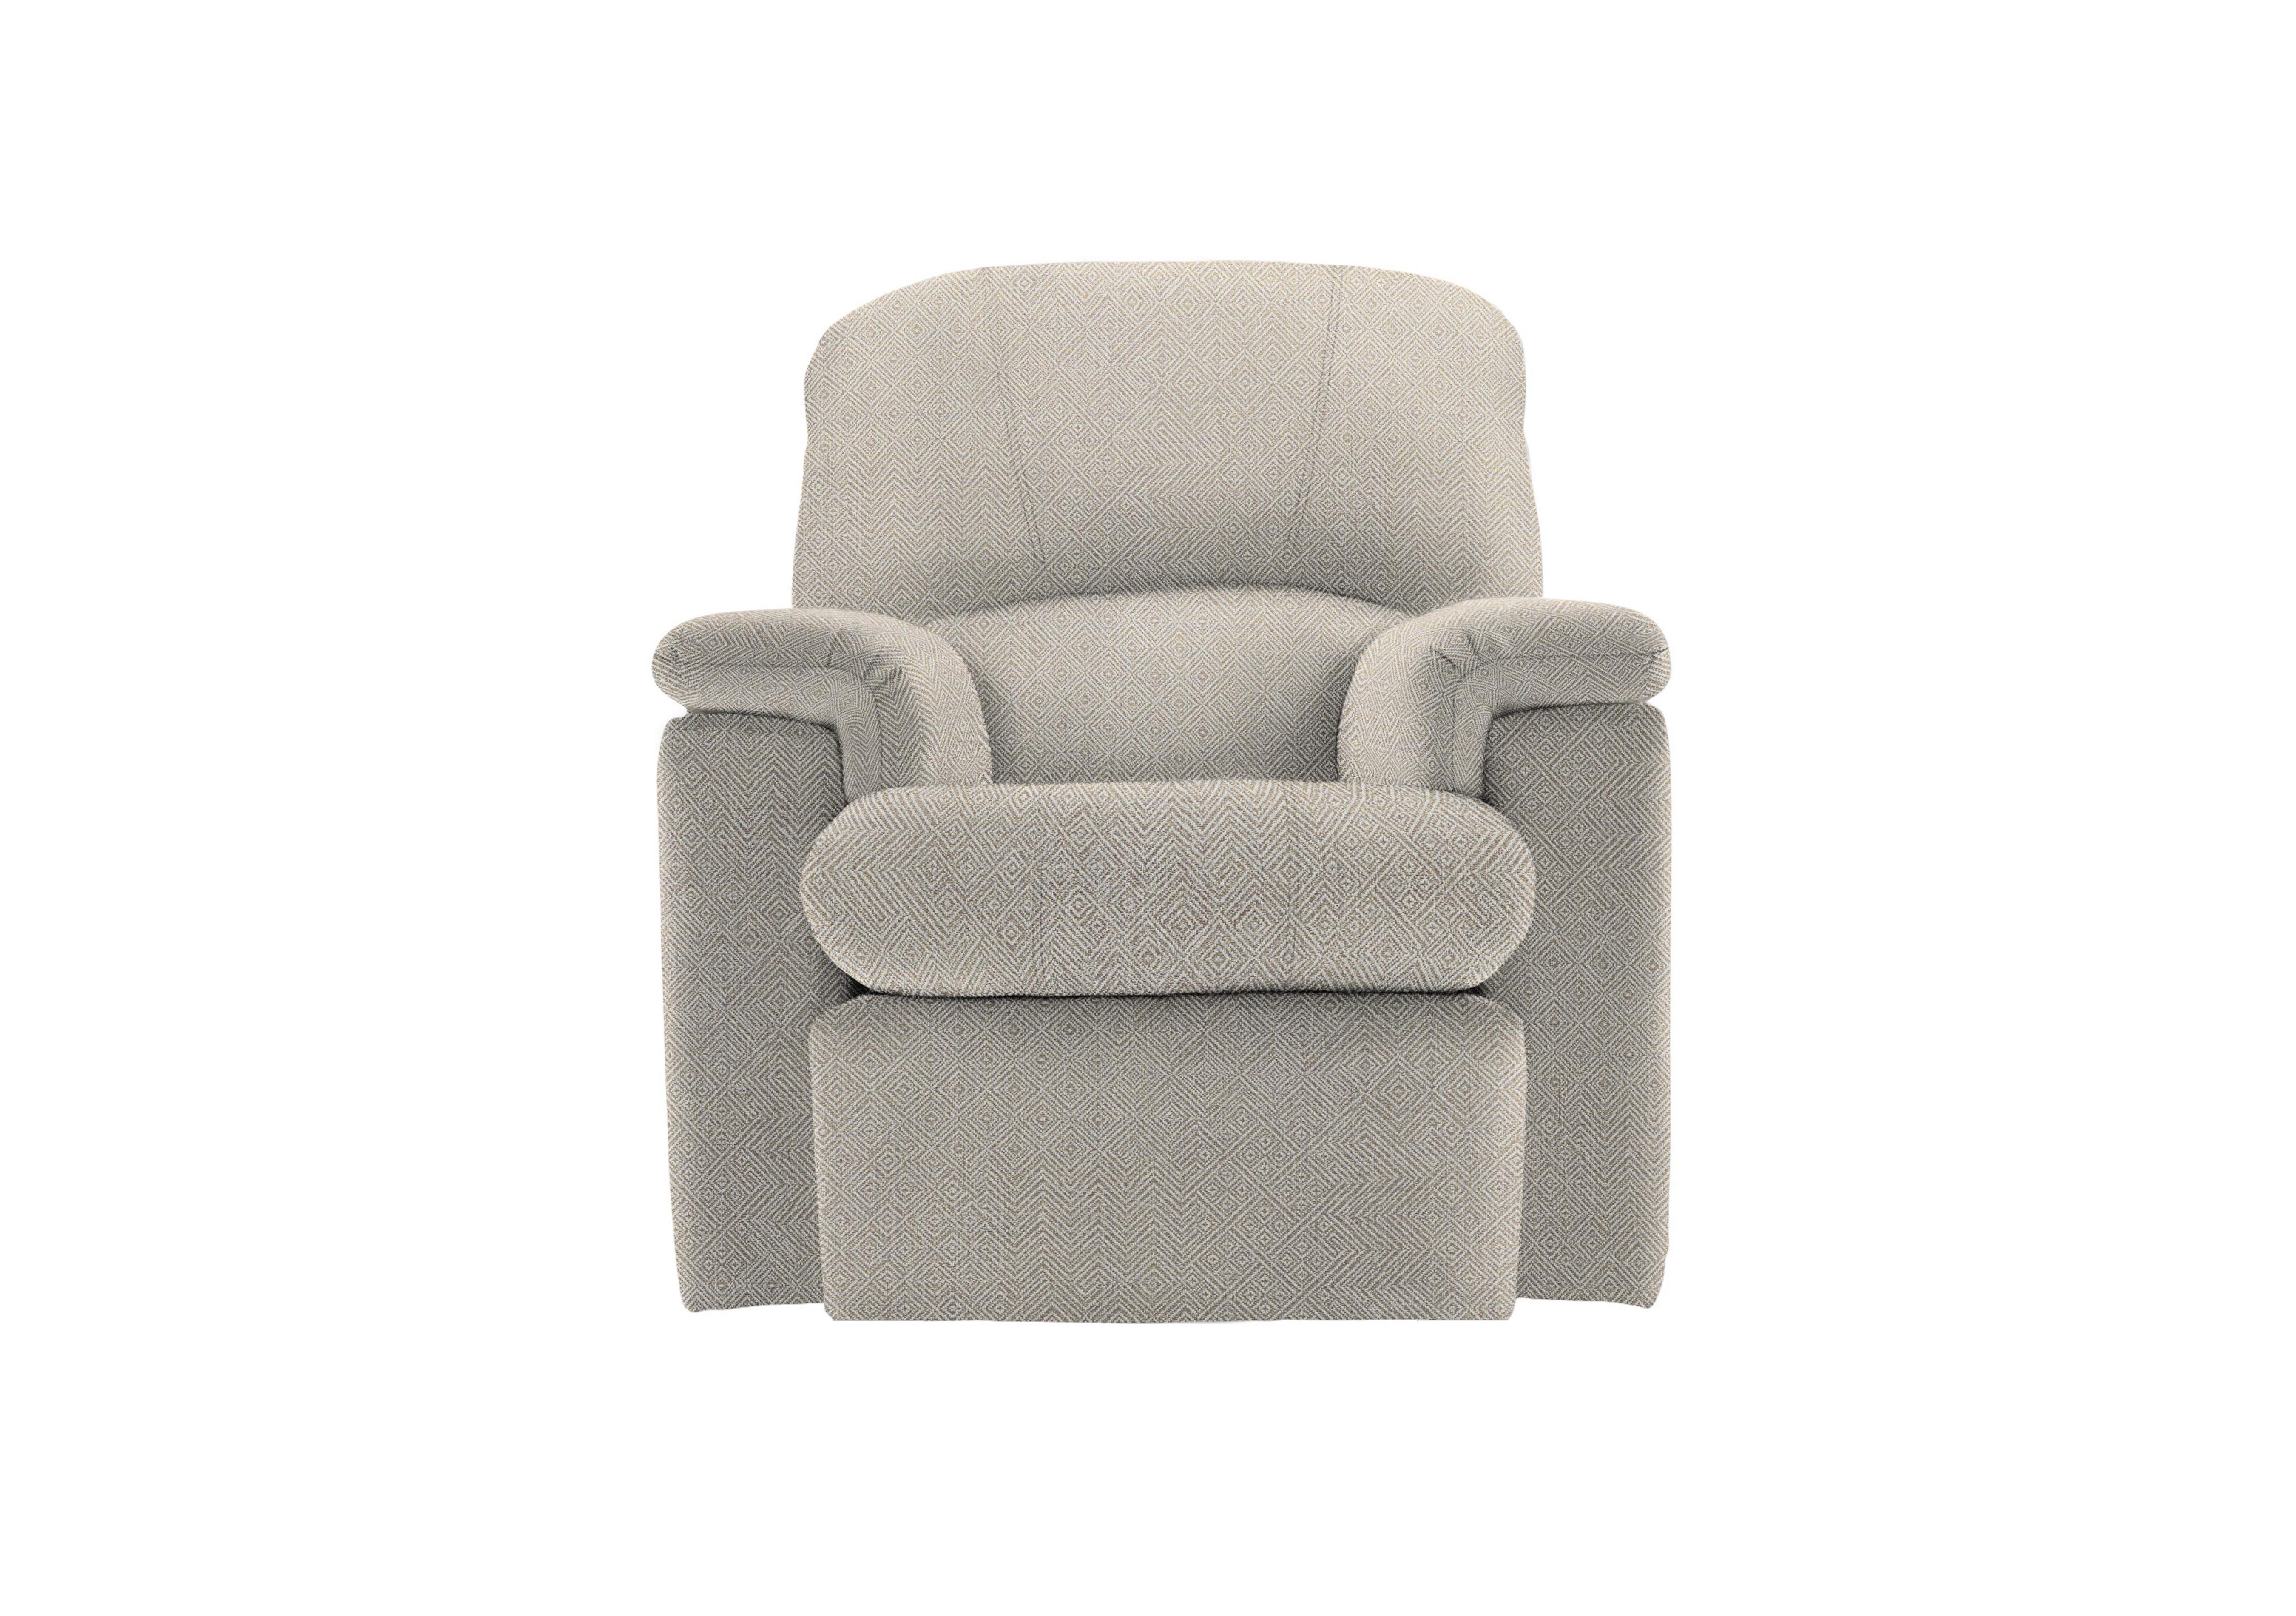 Chloe Small Fabric Armchair in B011 Nebular Blush on Furniture Village